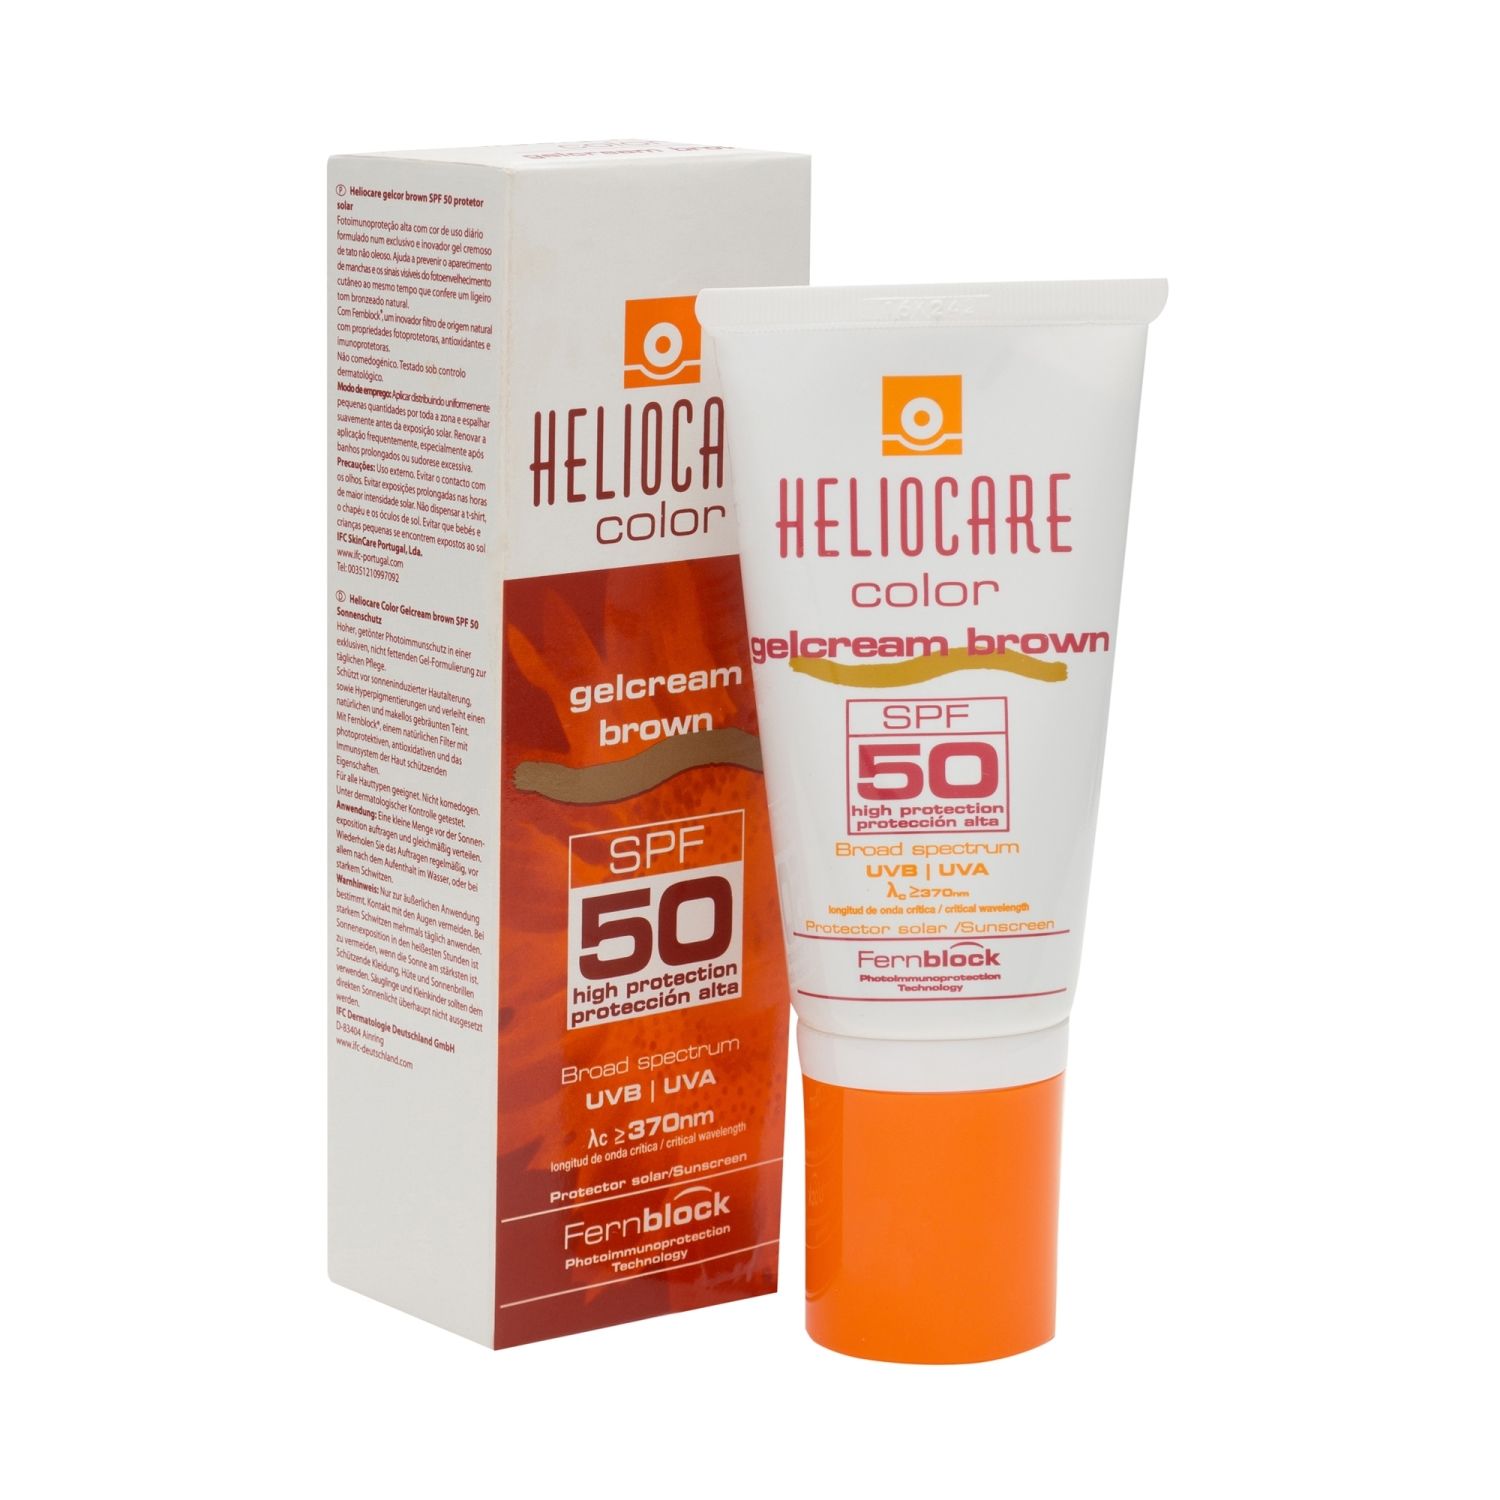 heliocare color spf50 gel crema brown 50ml